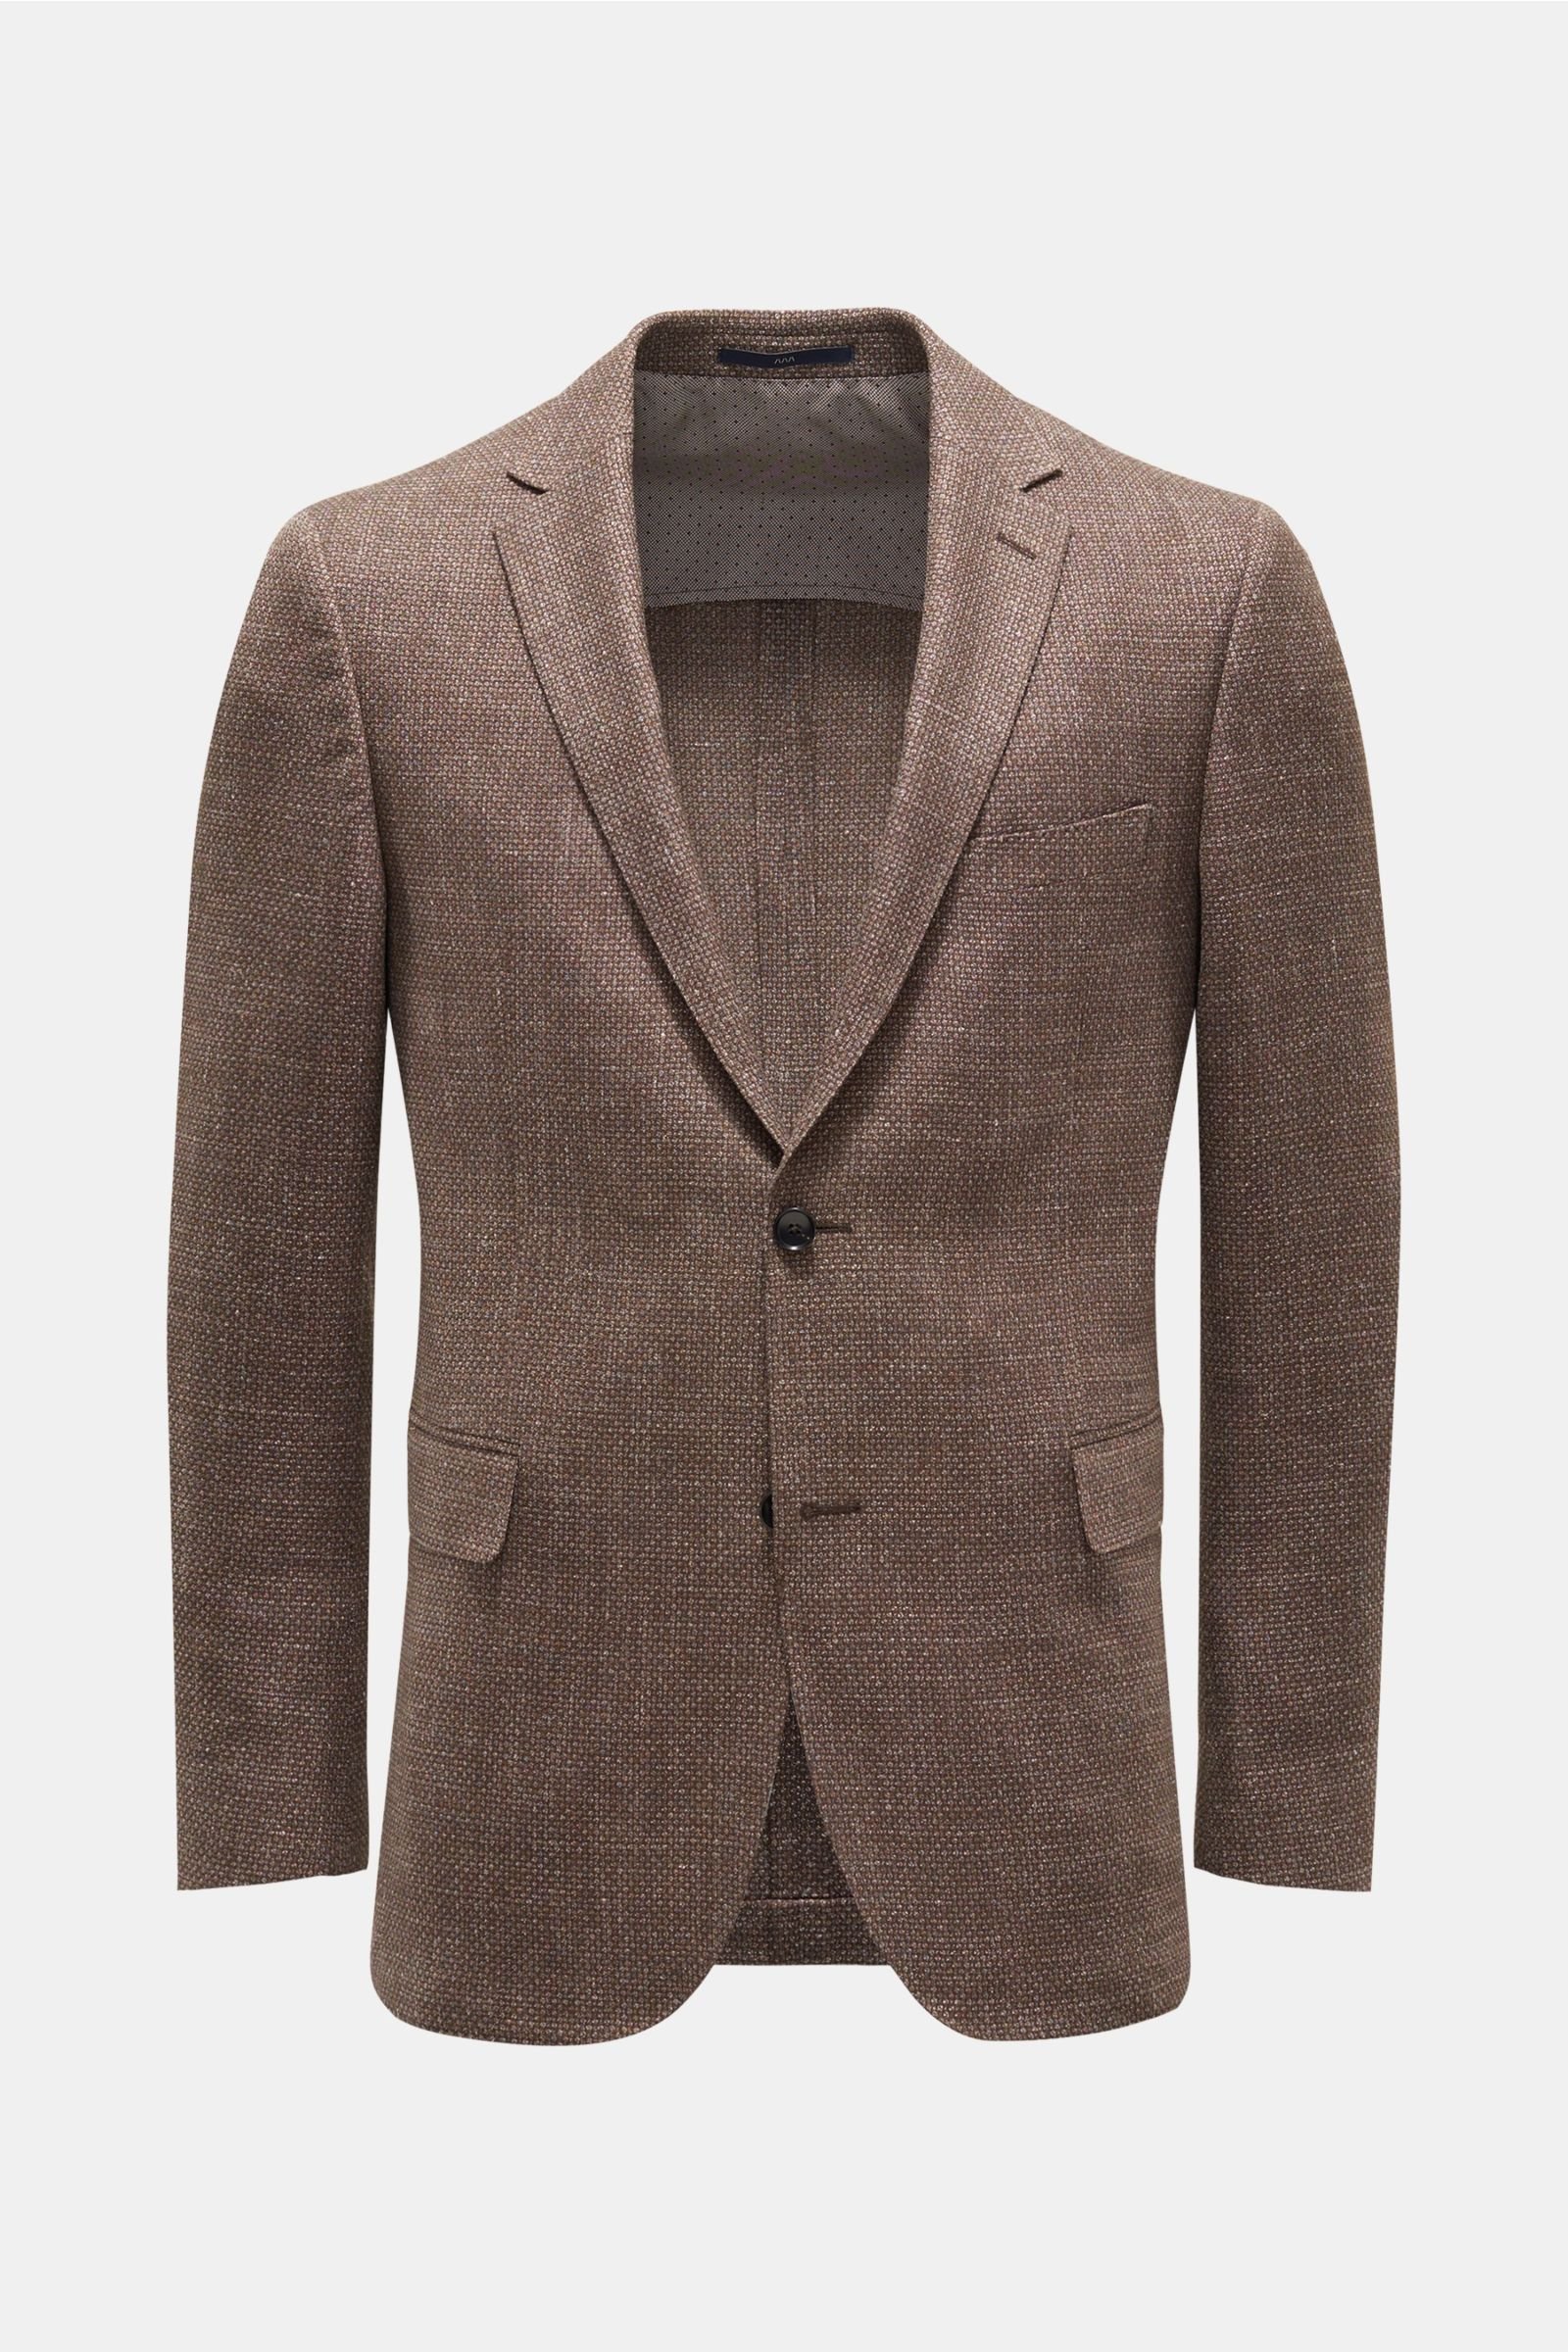 Smart-casual jacket 'Sean' dark brown